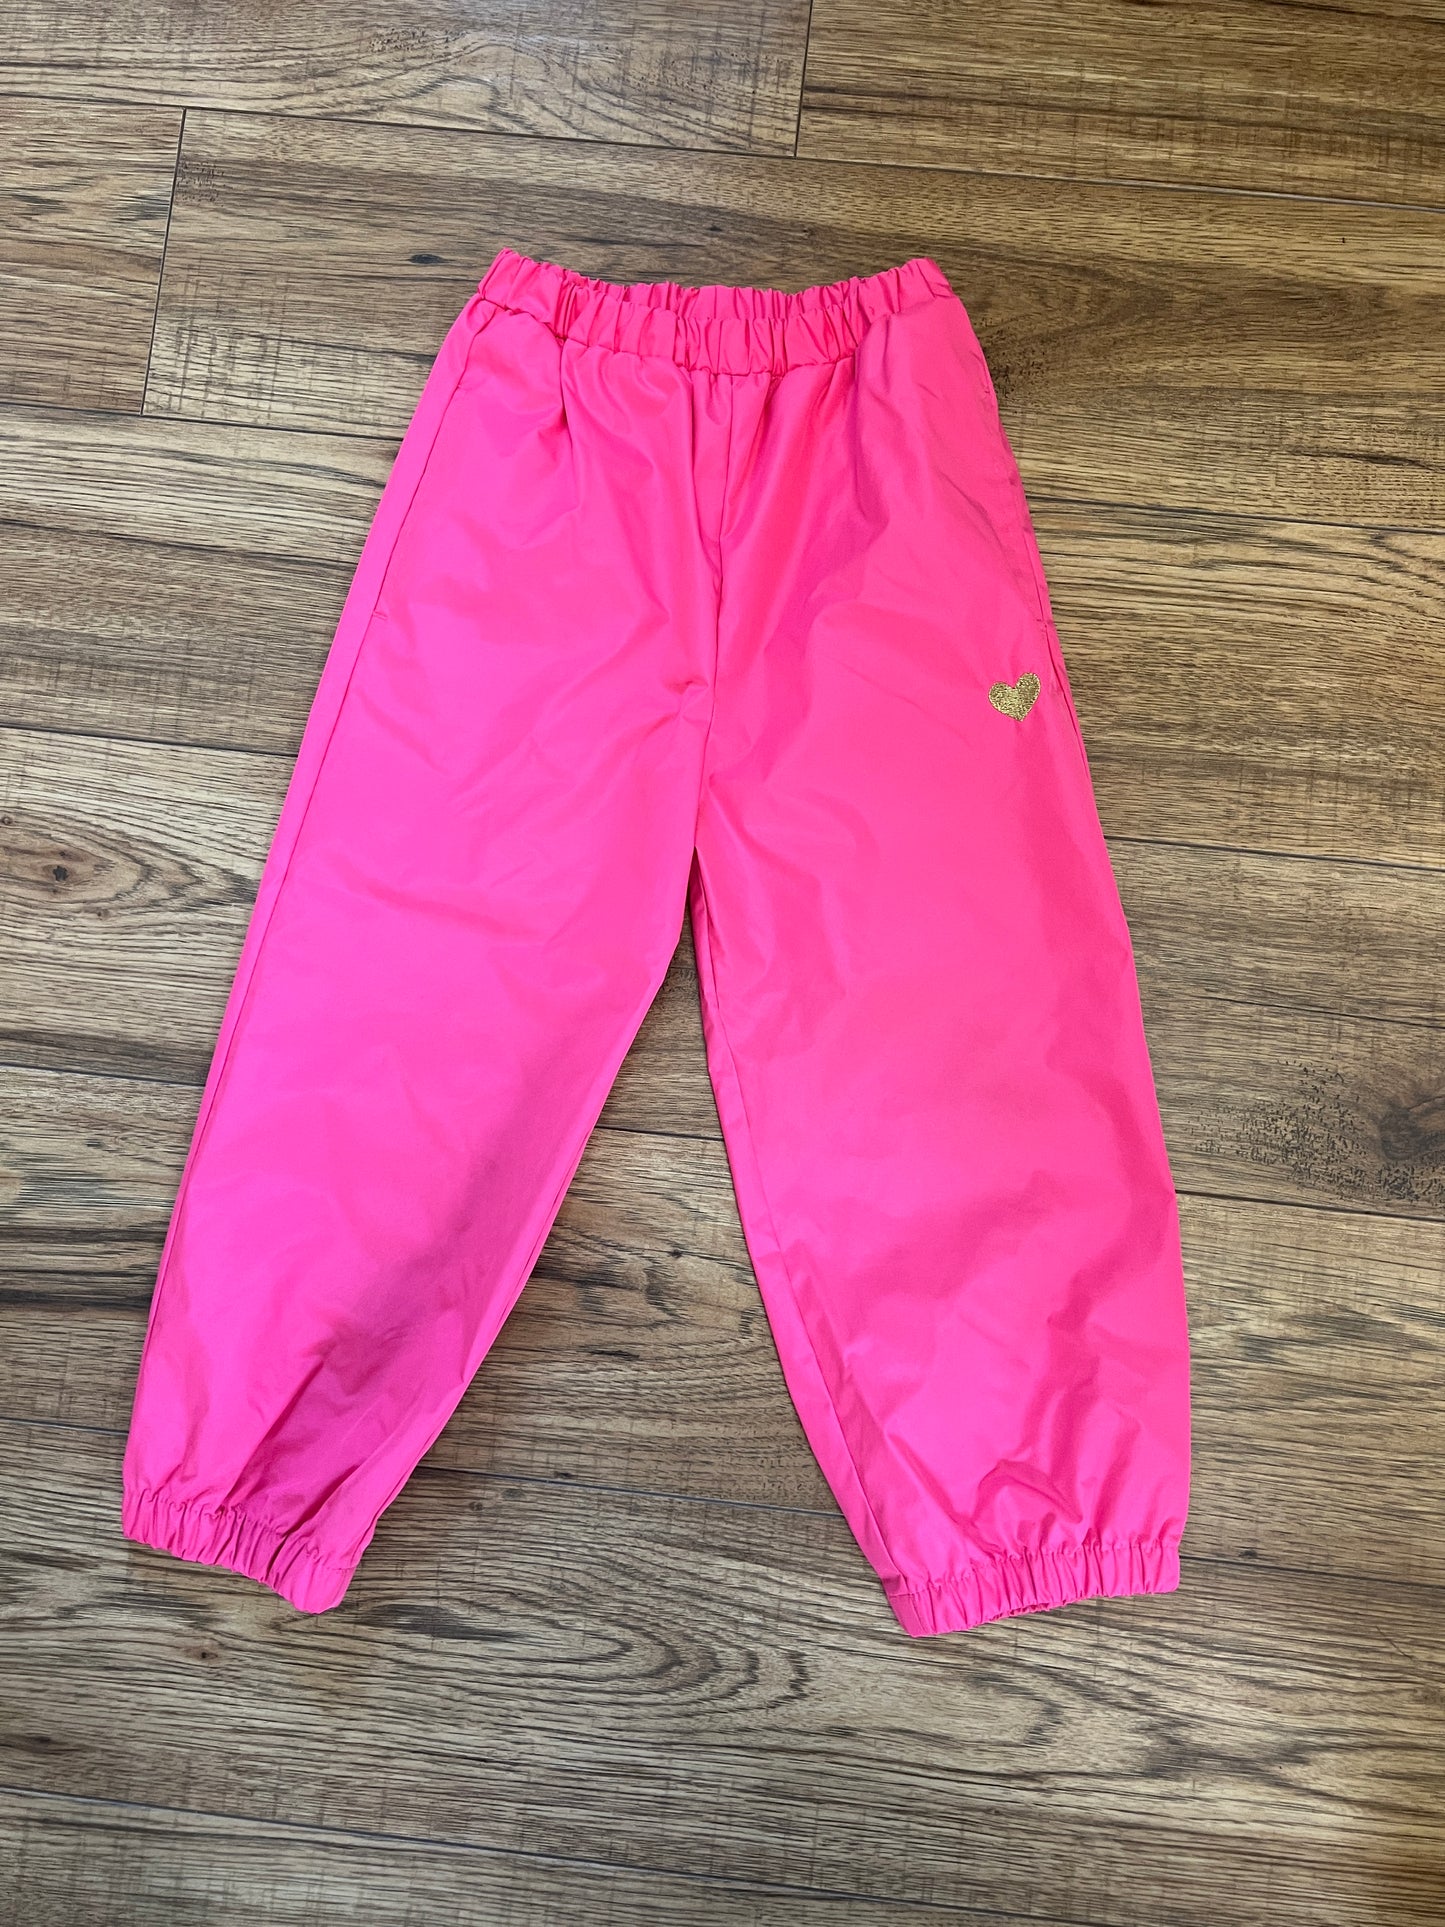 Rain Pants Child Size 5 Oshkosh Barbie Pink with Heart